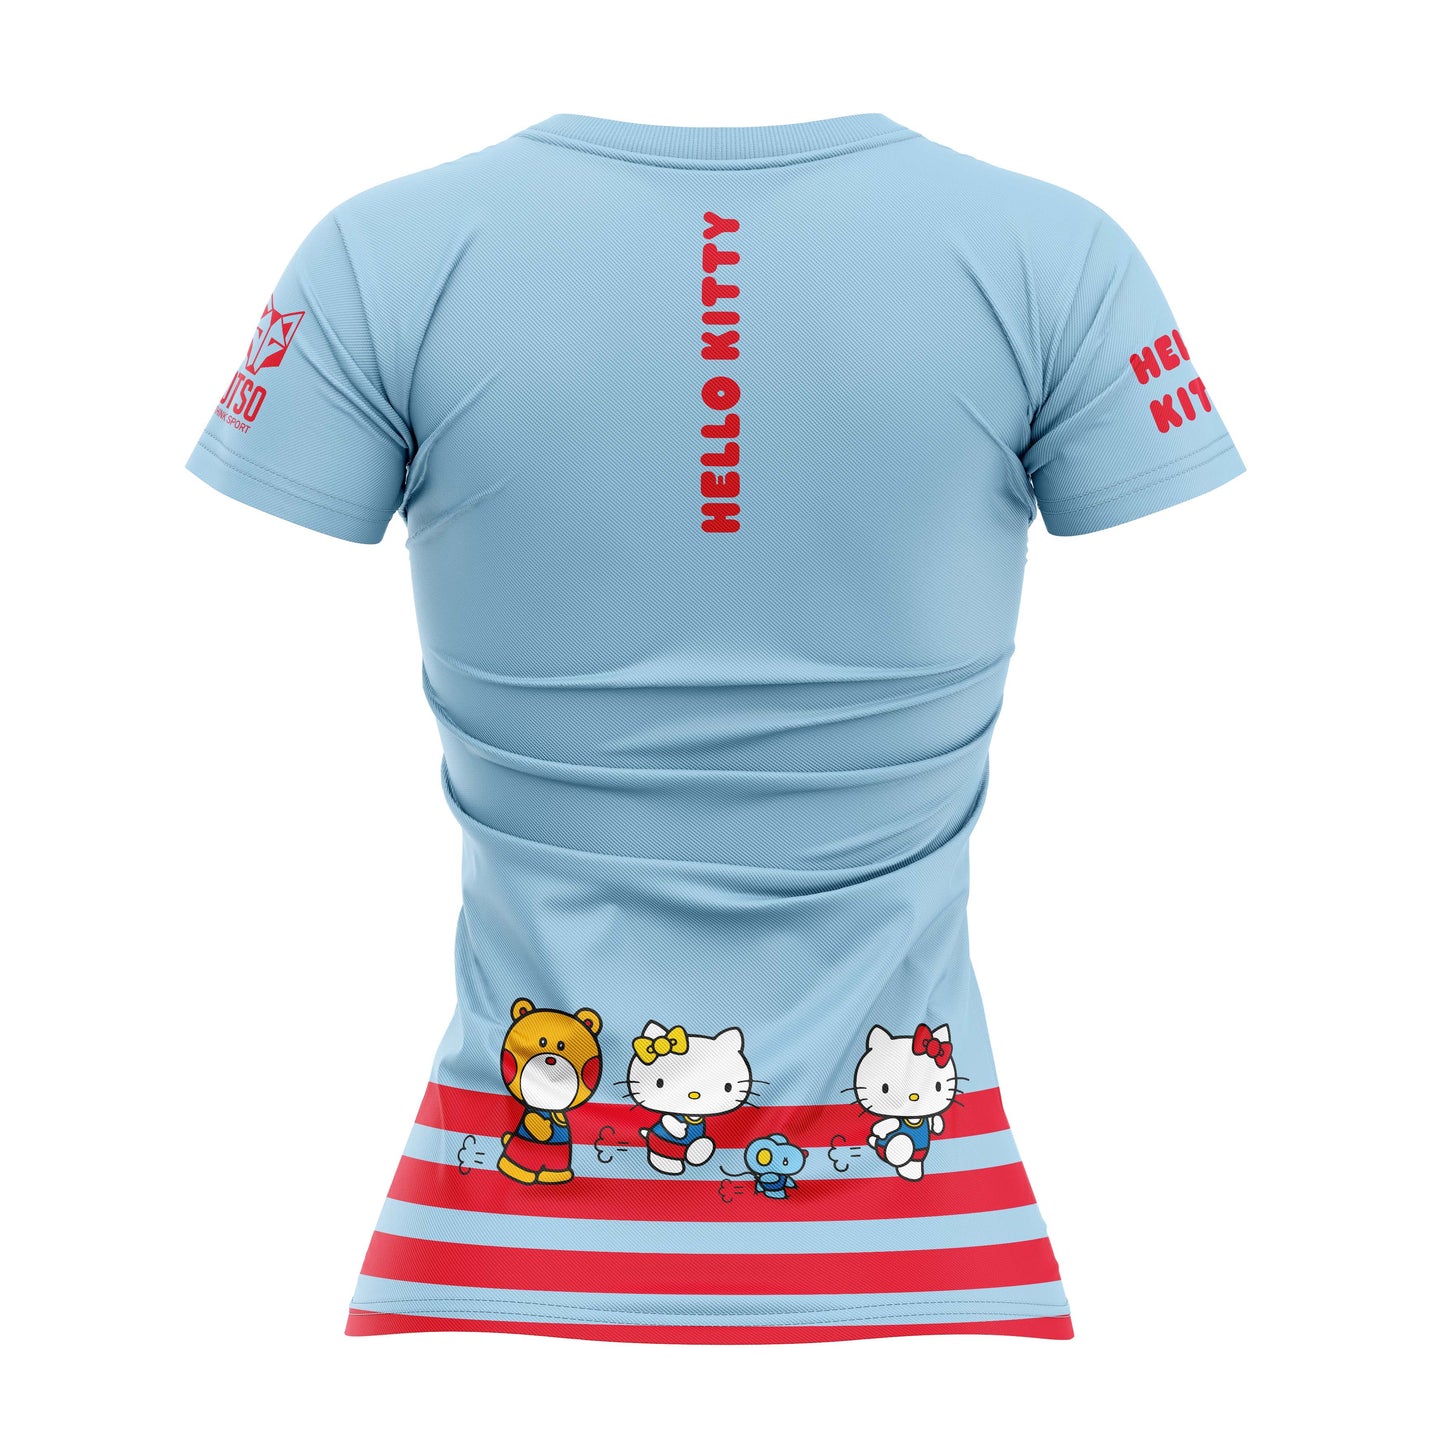 Camiseta manga corta niña y mujer - Hello Kitty Stripes